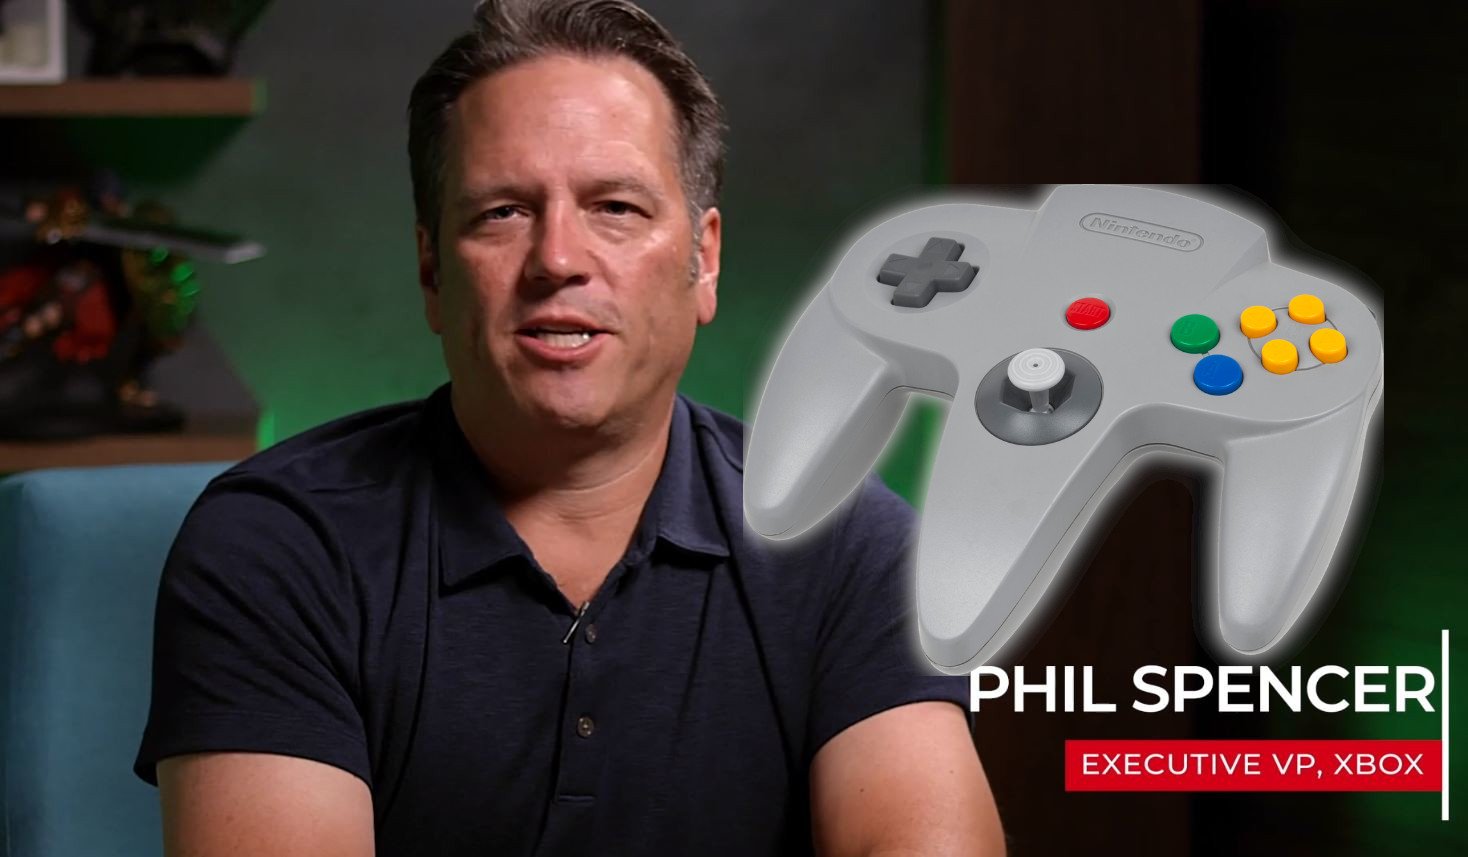 Phil Spencer responds to Xbox leak